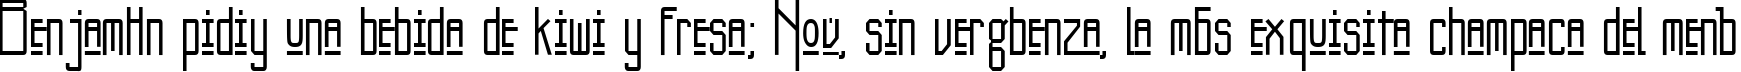 Пример написания шрифтом NewDeli текста на испанском